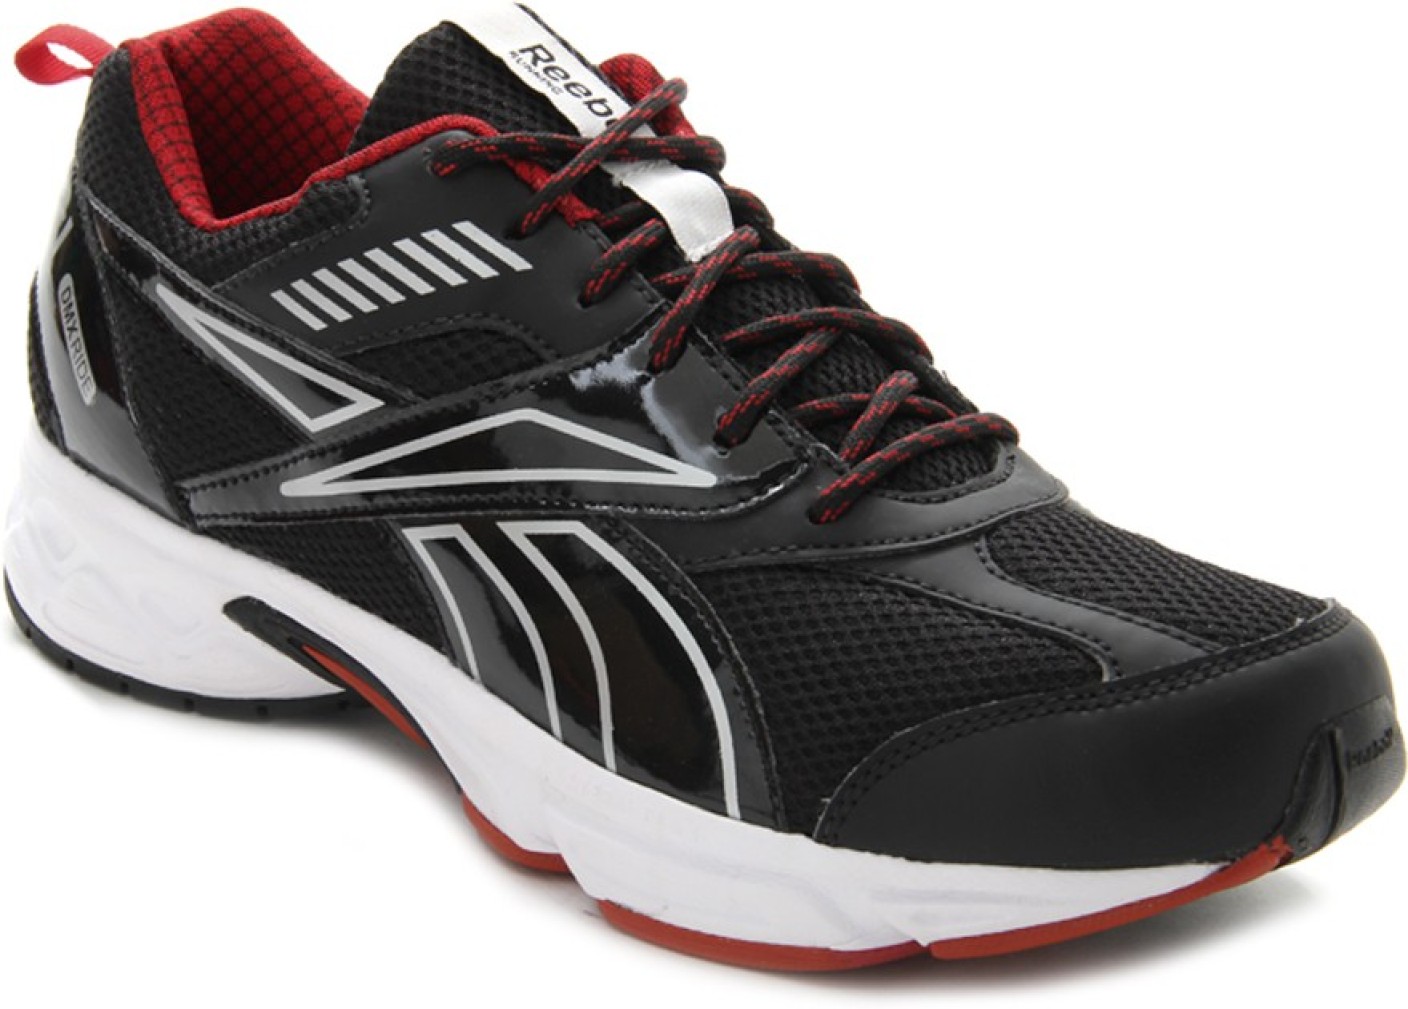 Reebok Active Sport 4.0 Lp Running Shoes For Men - Buy Black, Silver ...